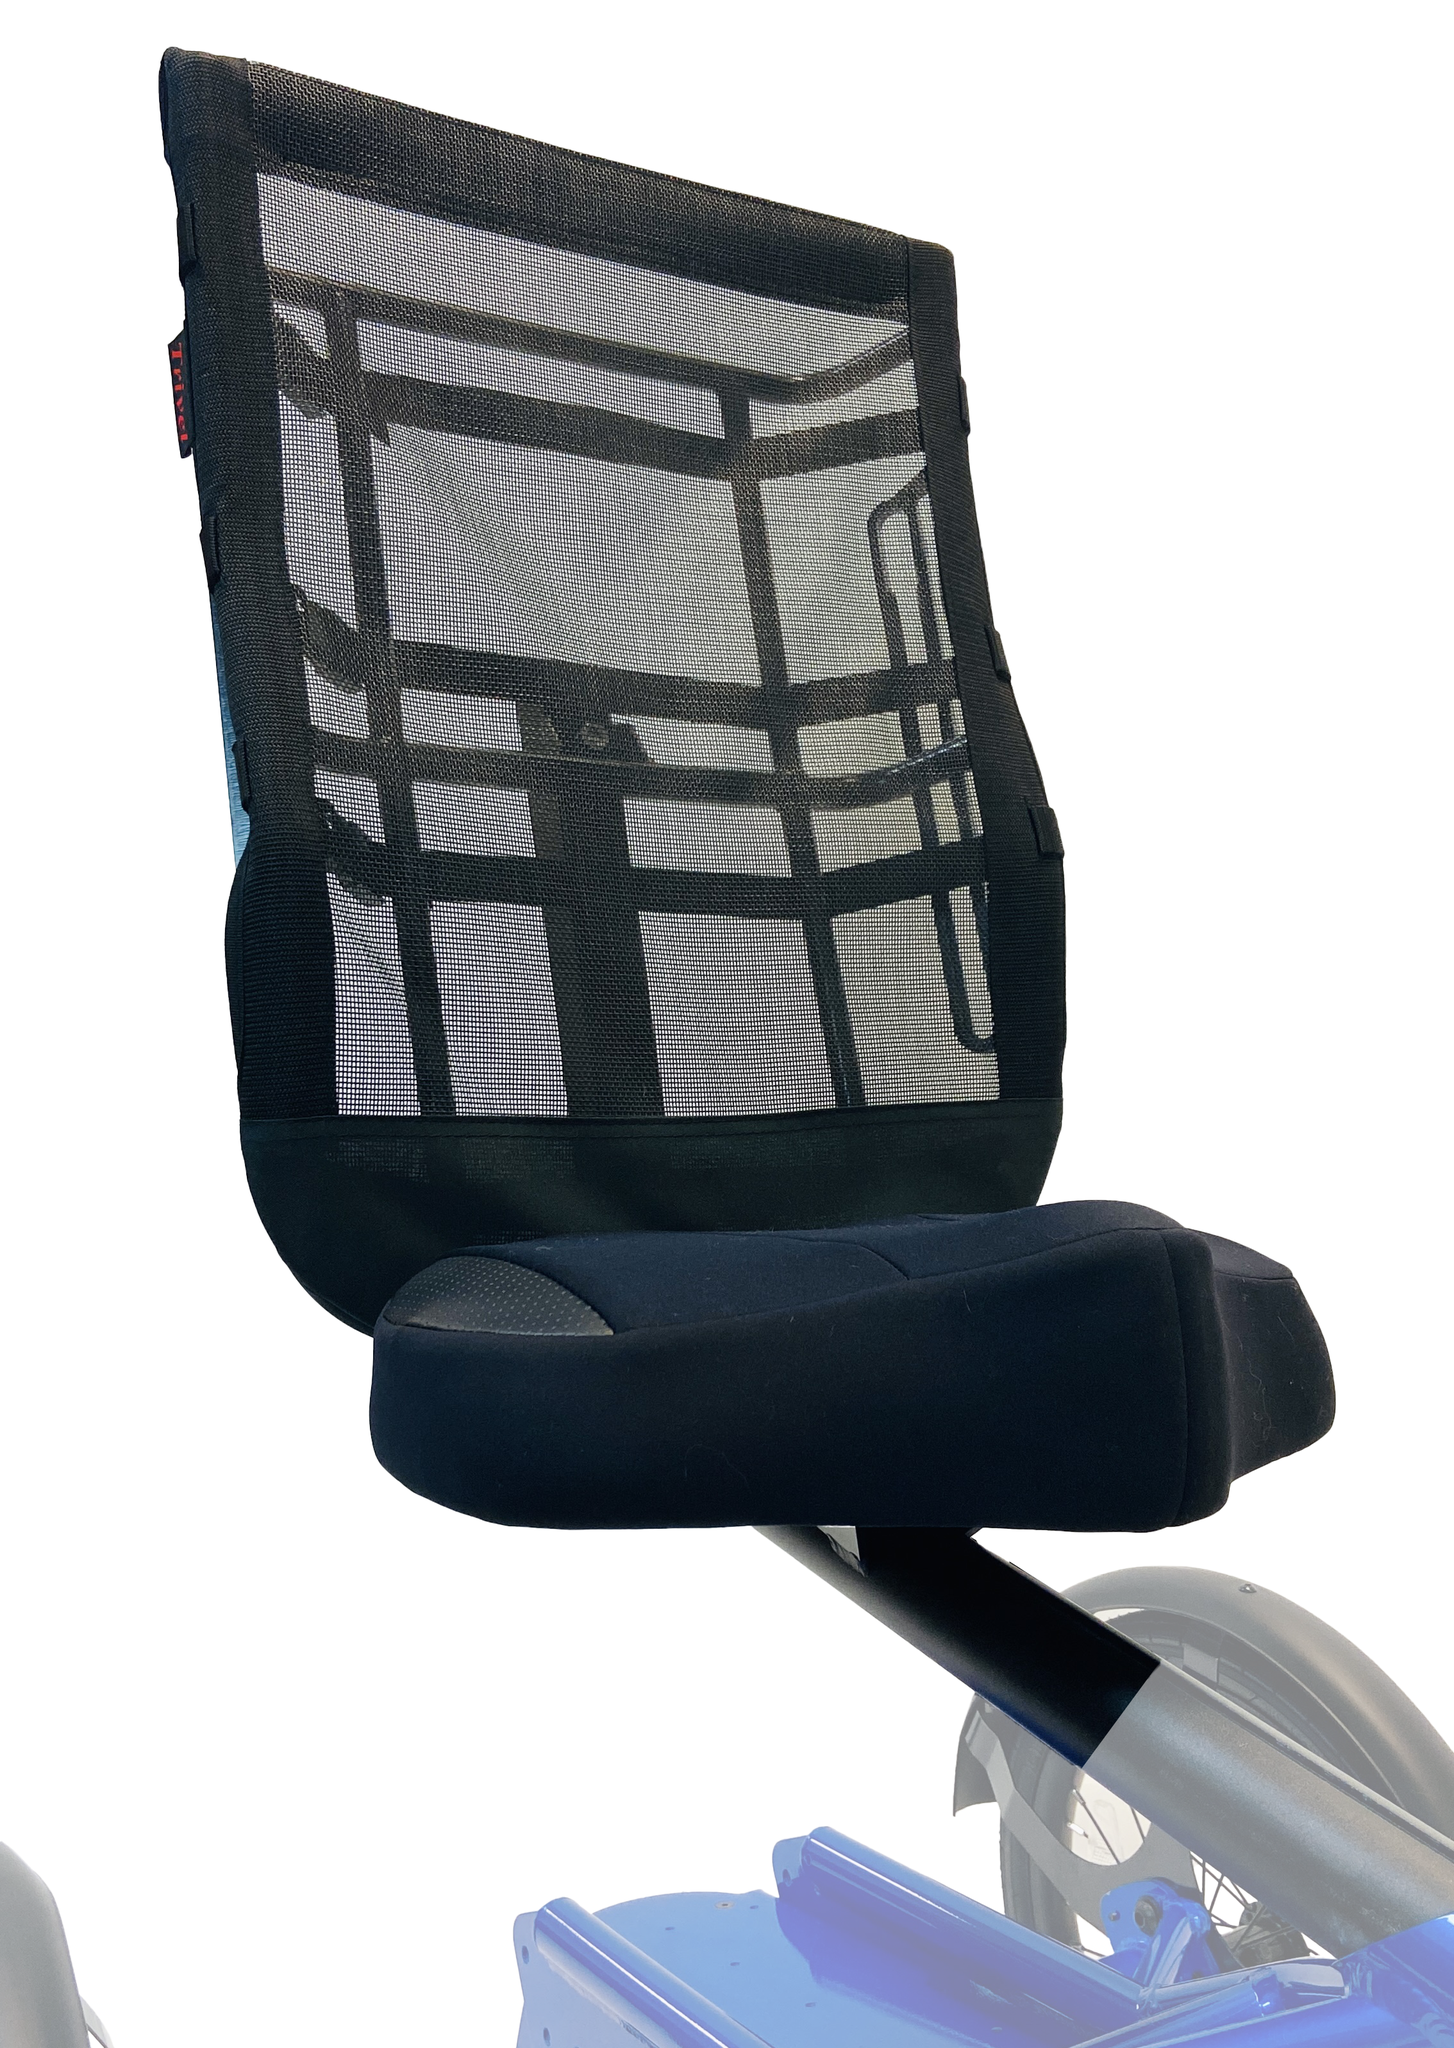 Option: Confort Plus seat and backrest